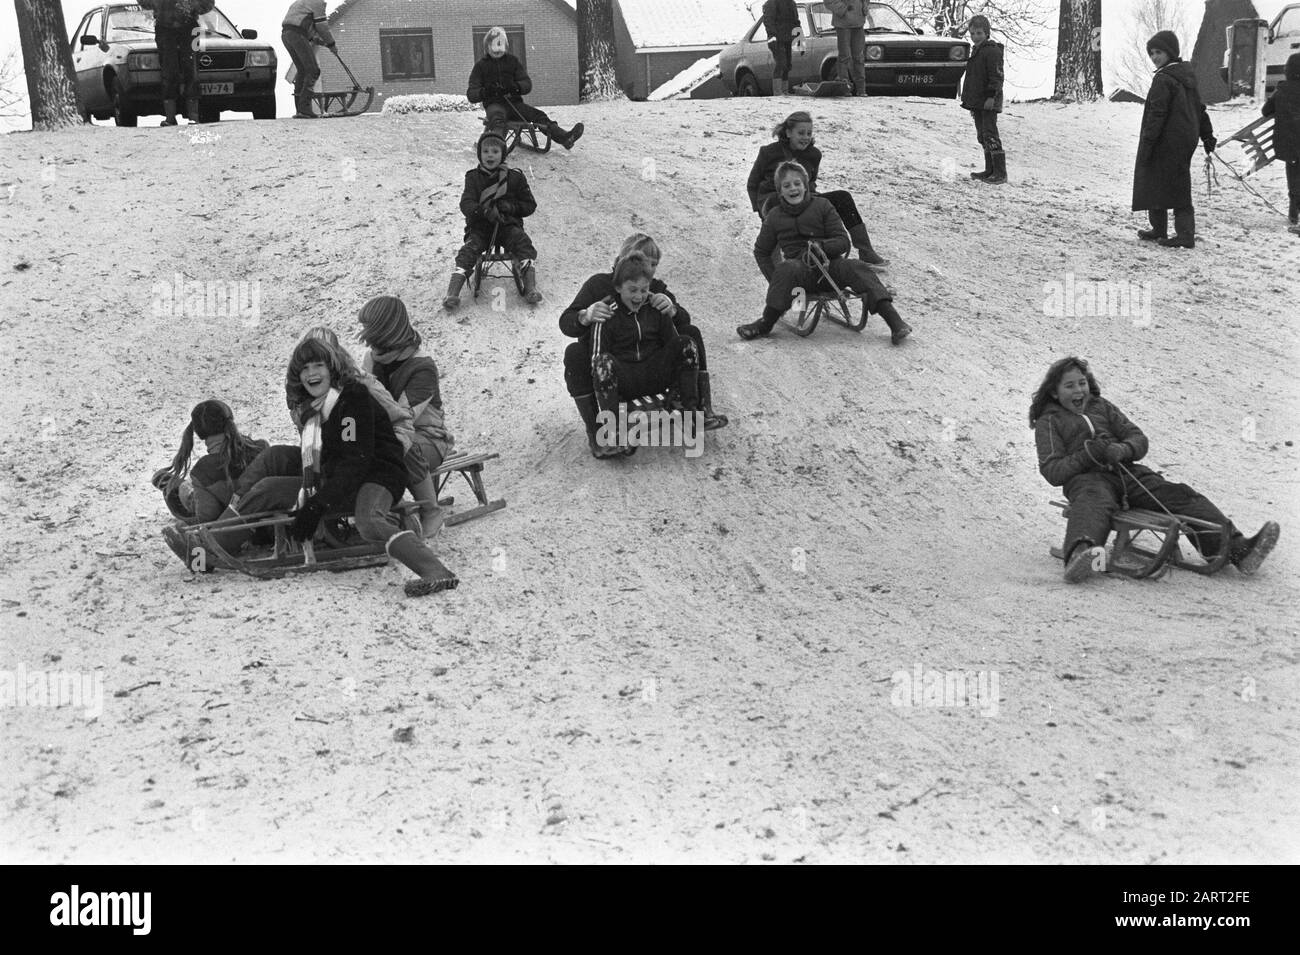 Snow fun. Sleeende children in Nieuwkoop Date: 13 december 1981 Location: Newkoop Keywords: Children, snow fun Stock Photo